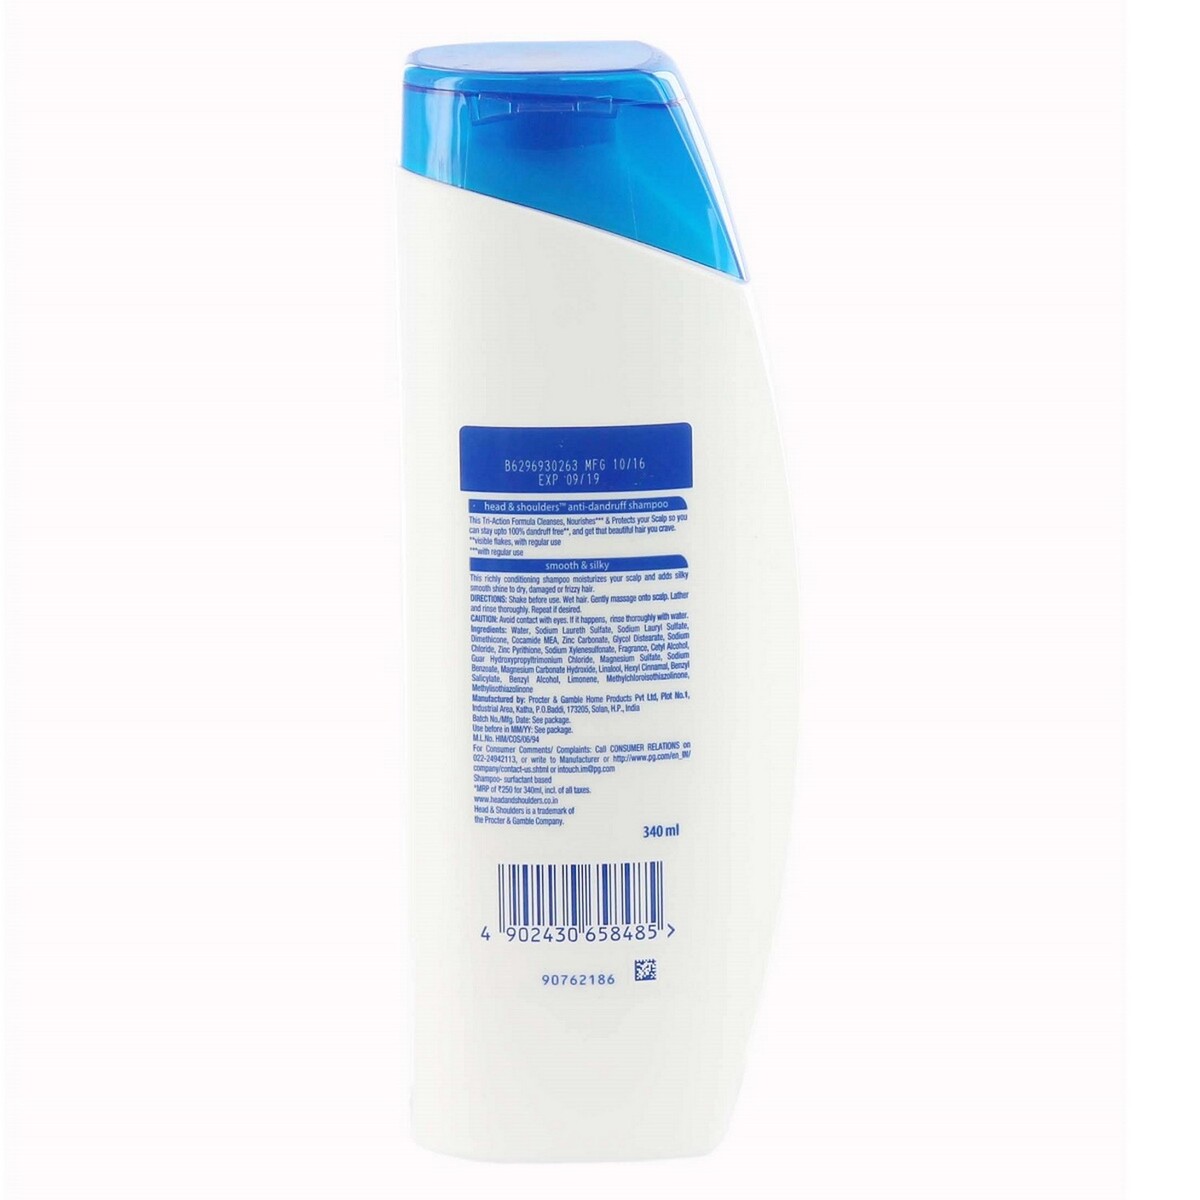 Head & Shoulders Shampoo Smooth & Silky 340ml